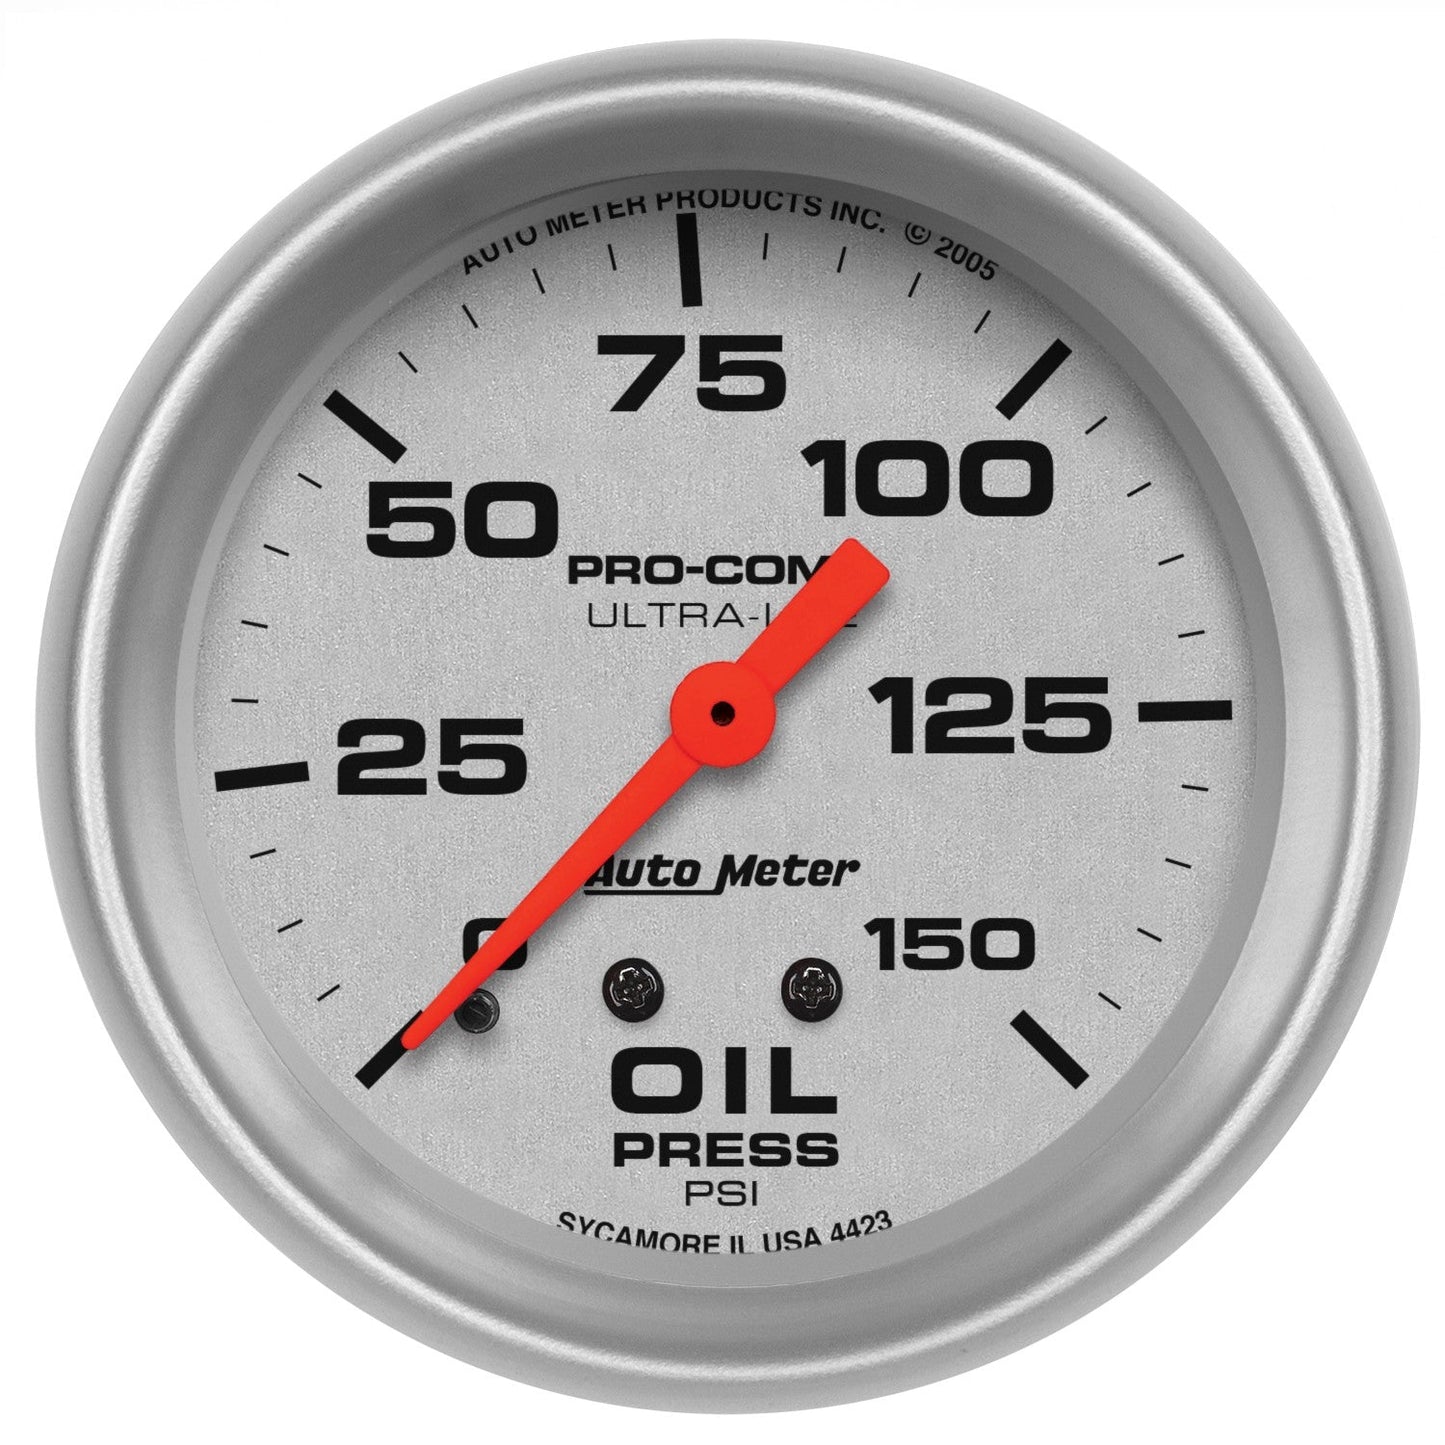 AutoMeter - 2-5/8" OIL PRESSURE, 0-150 PSI, MECHANICAL, ULTRA-LITE (4423)